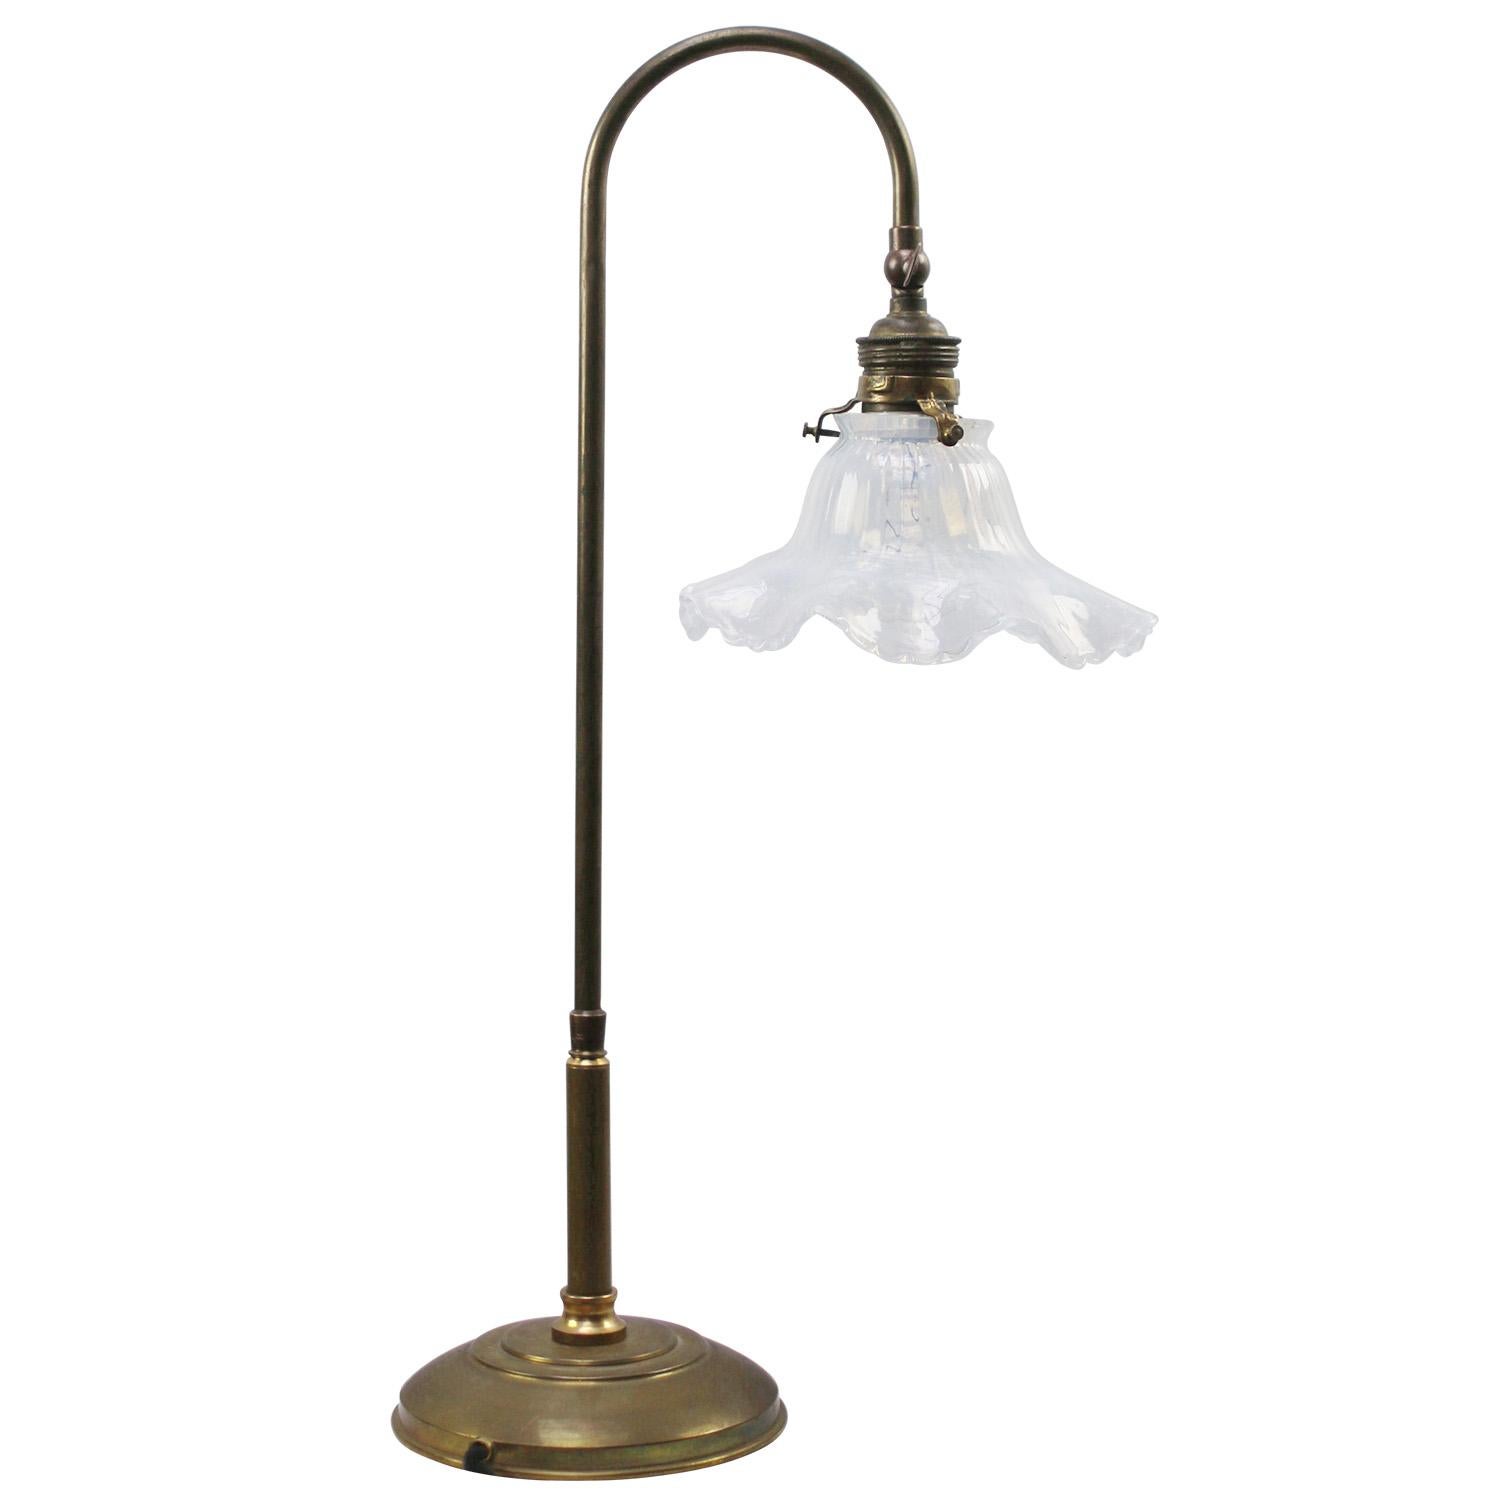 Art Nouveau French Brass & Glass Table Desk Light For Sale 1